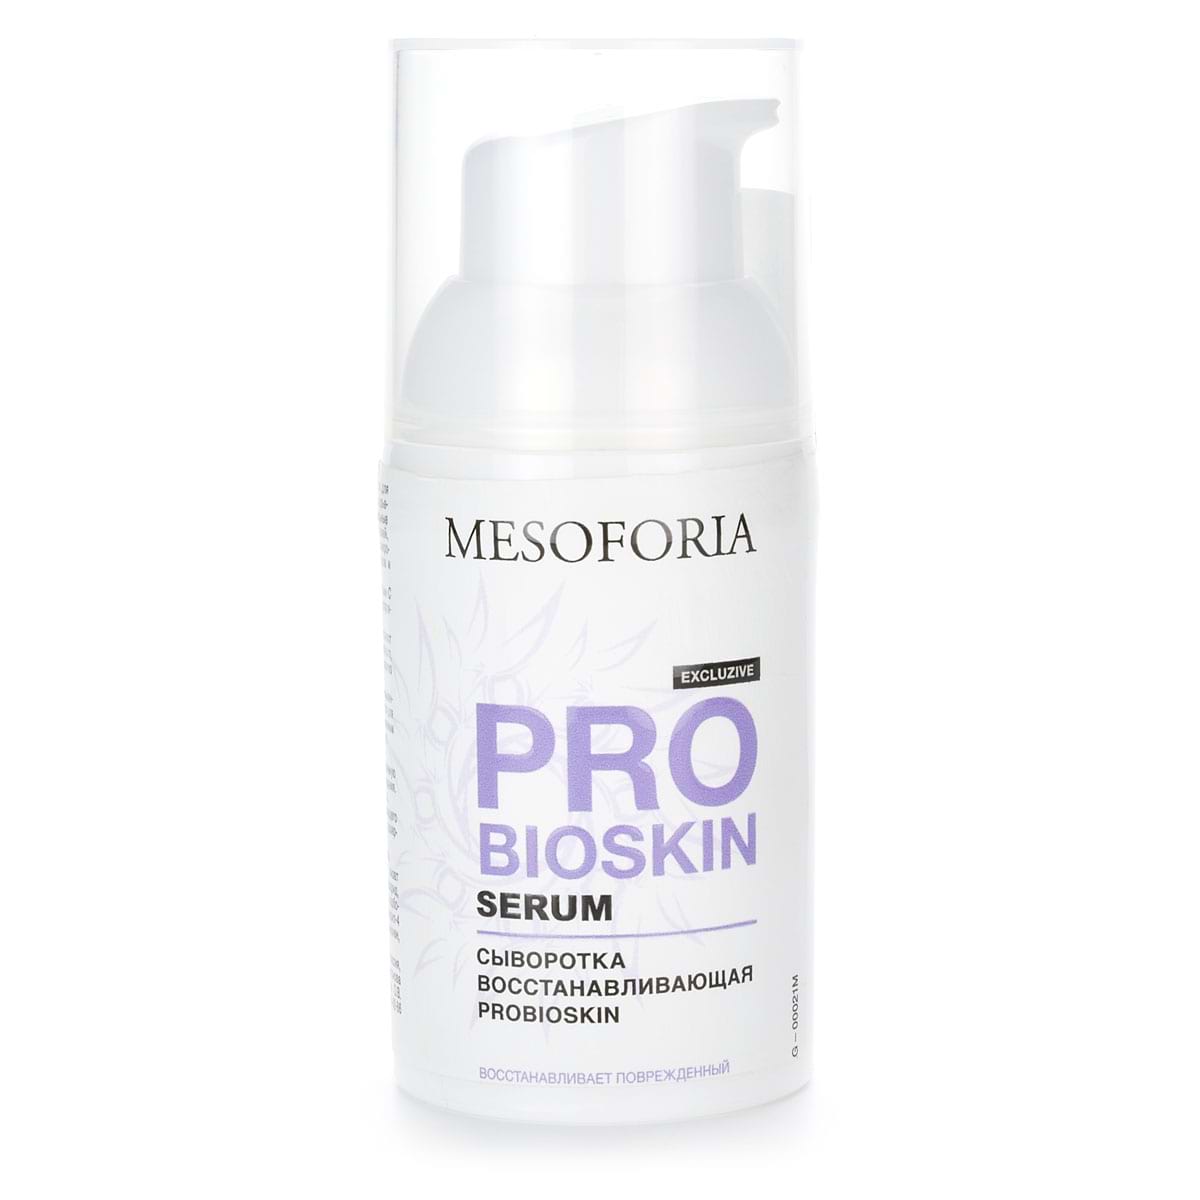 ProbioSkin Serum / Сыворотка восстанавливающая ProbioSkin, Mesoforia (Мезофория) – 30 мл